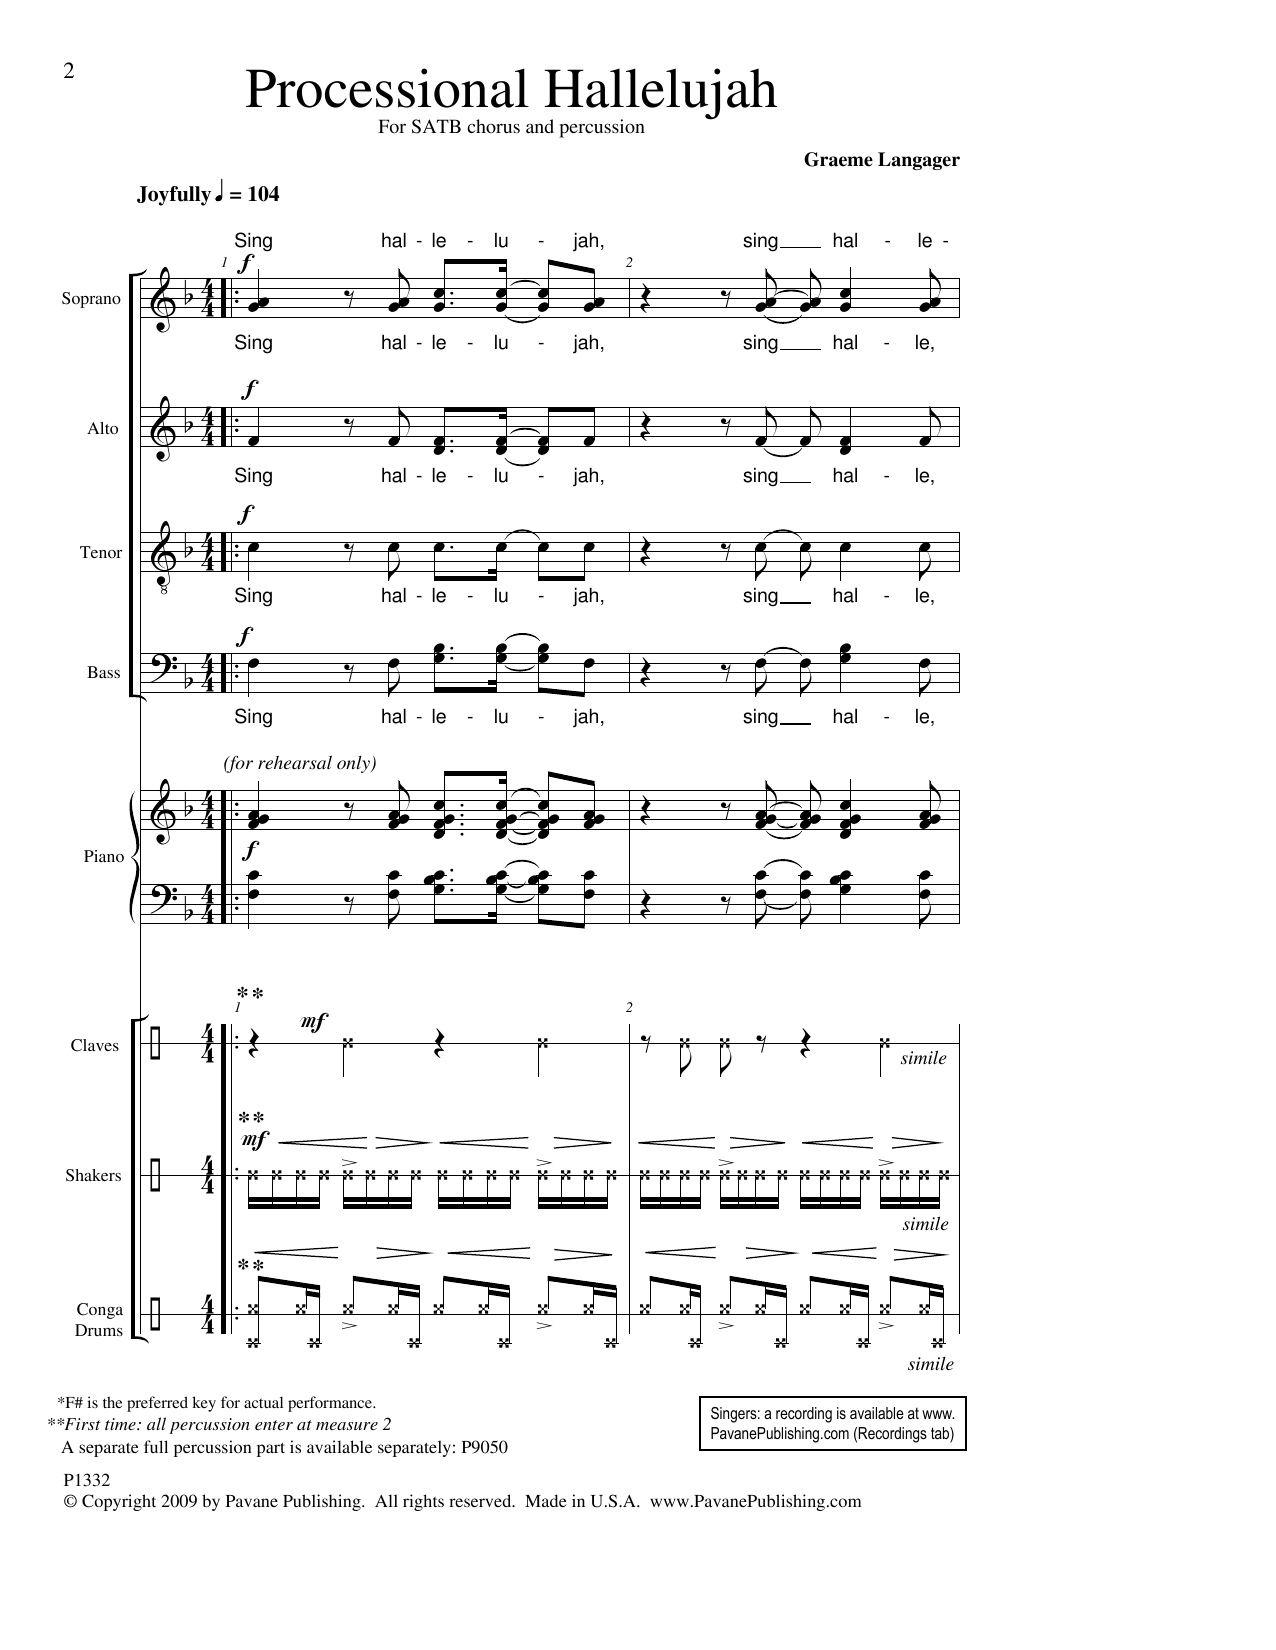 Graeme Langager Processional Hallelujah Sheet Music Notes & Chords for SATB Choir - Download or Print PDF